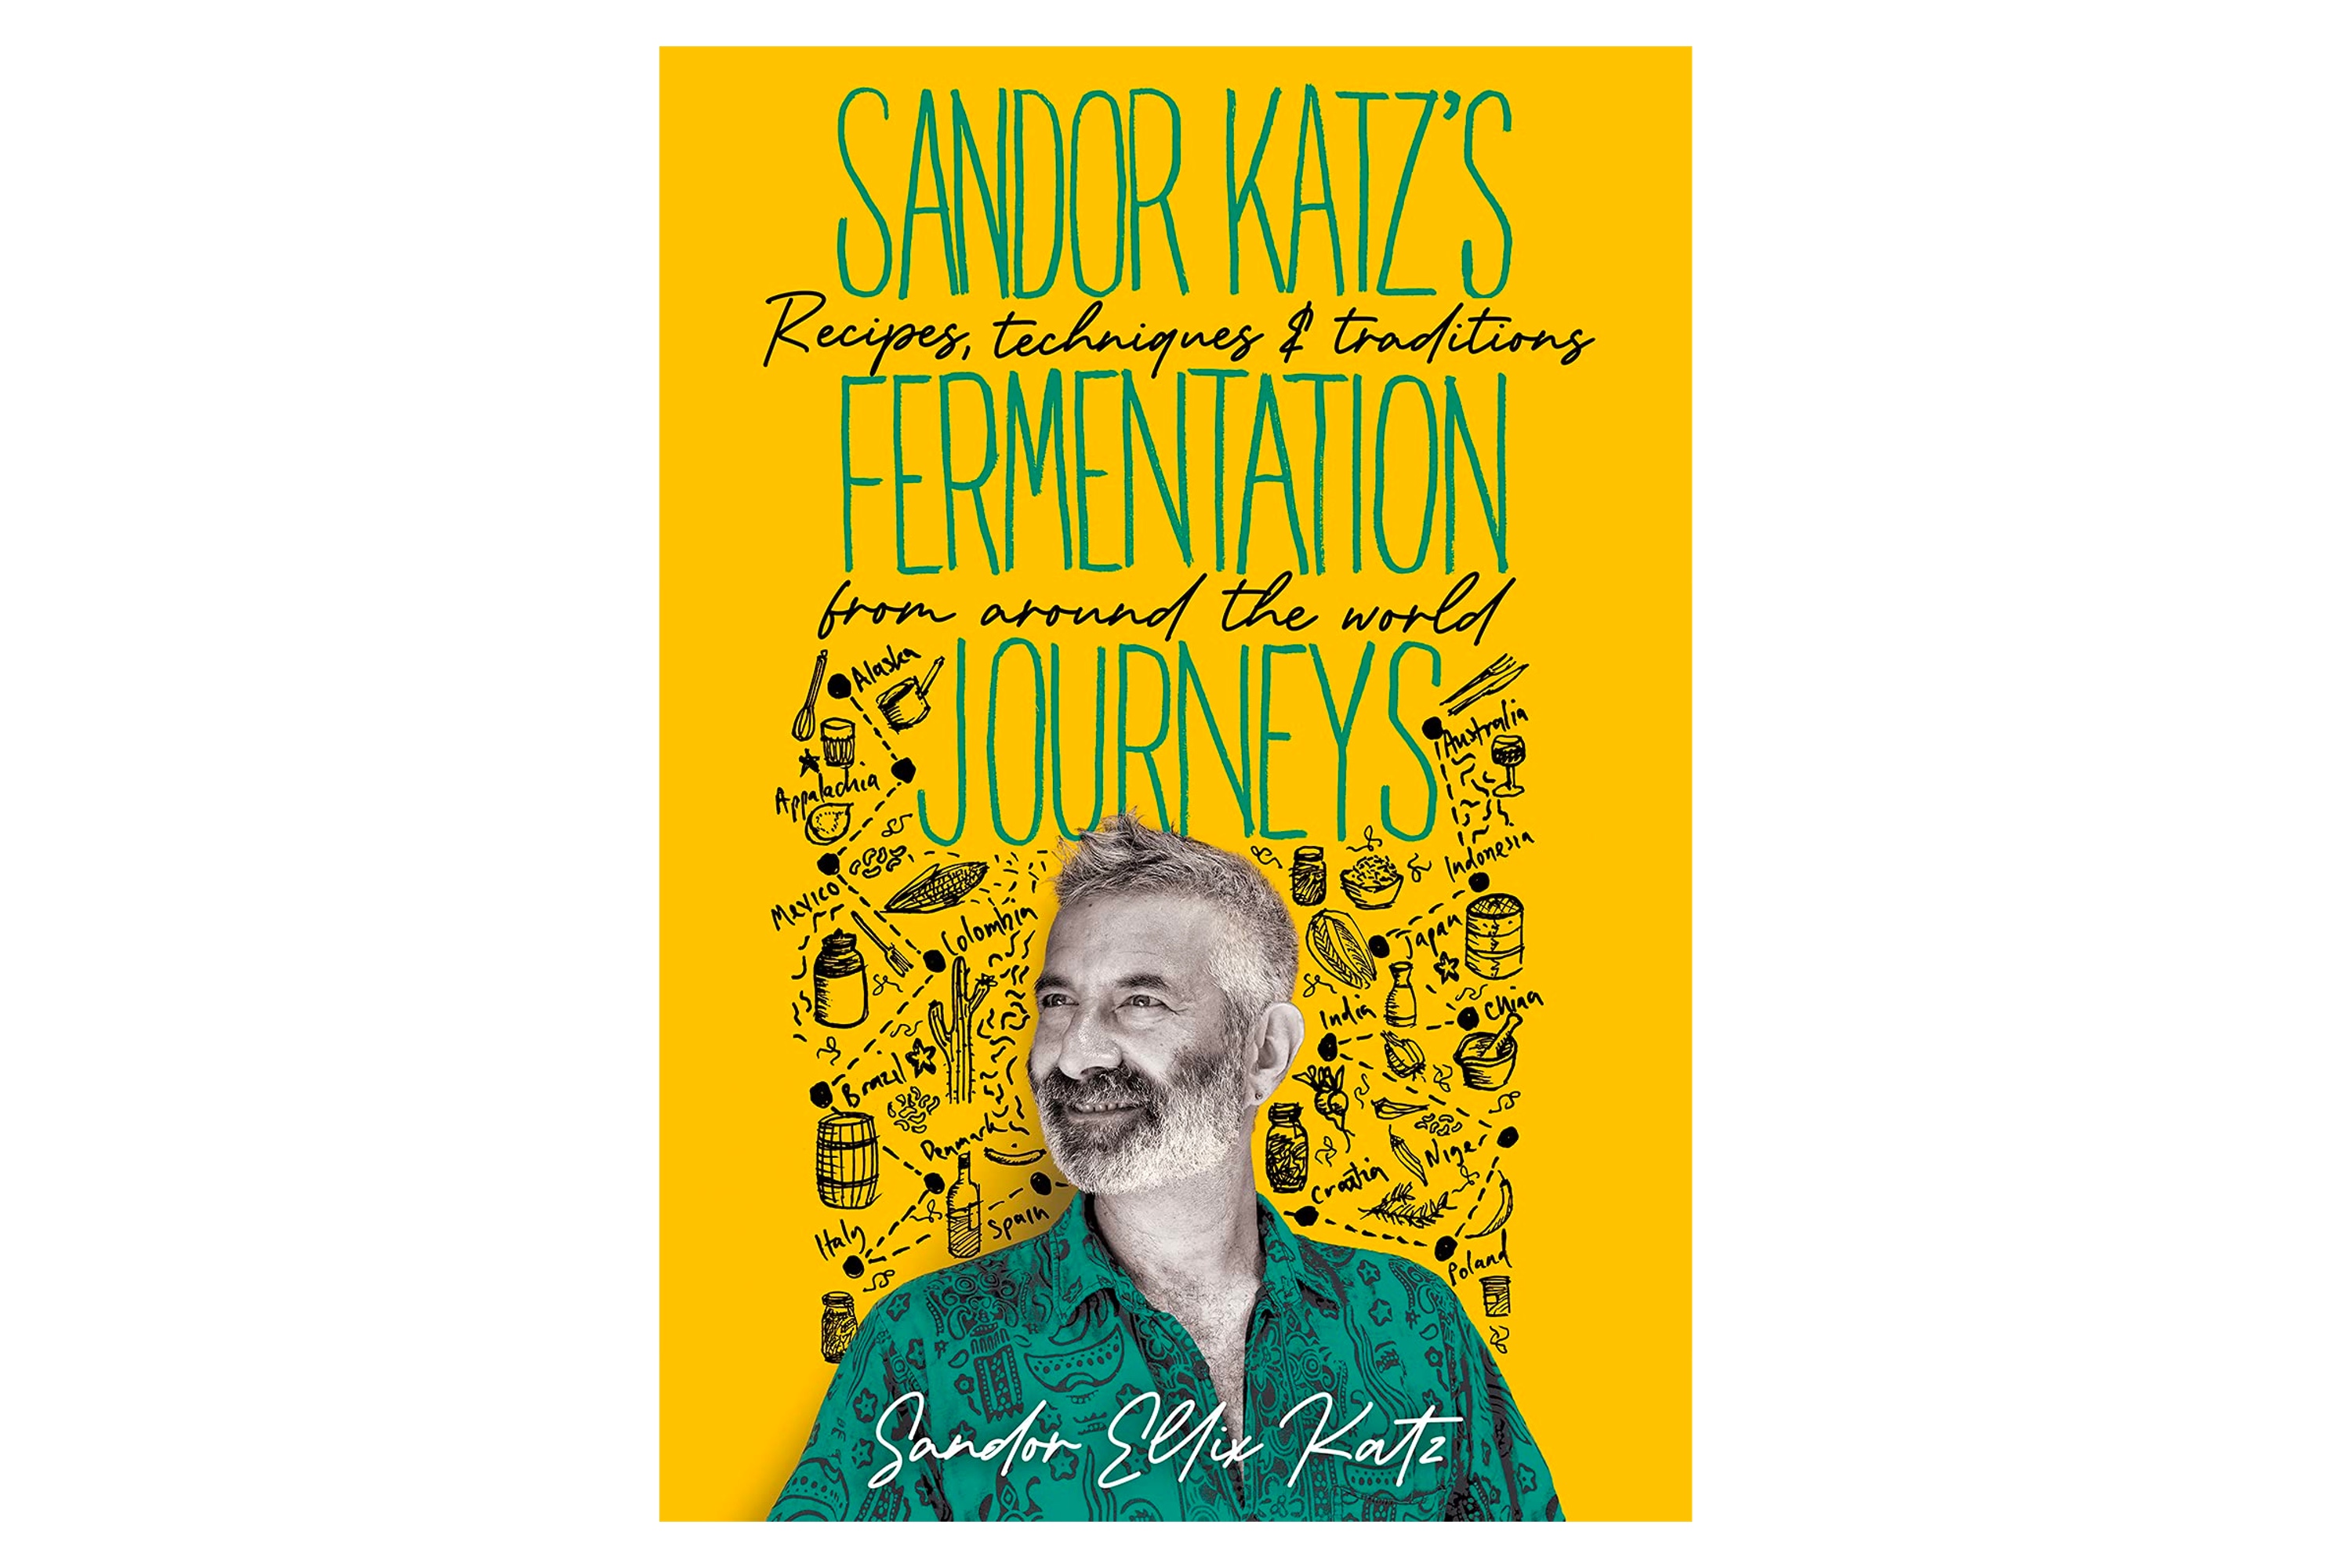 Sandor Katz's Fermentation Journeys / Sandor Katz